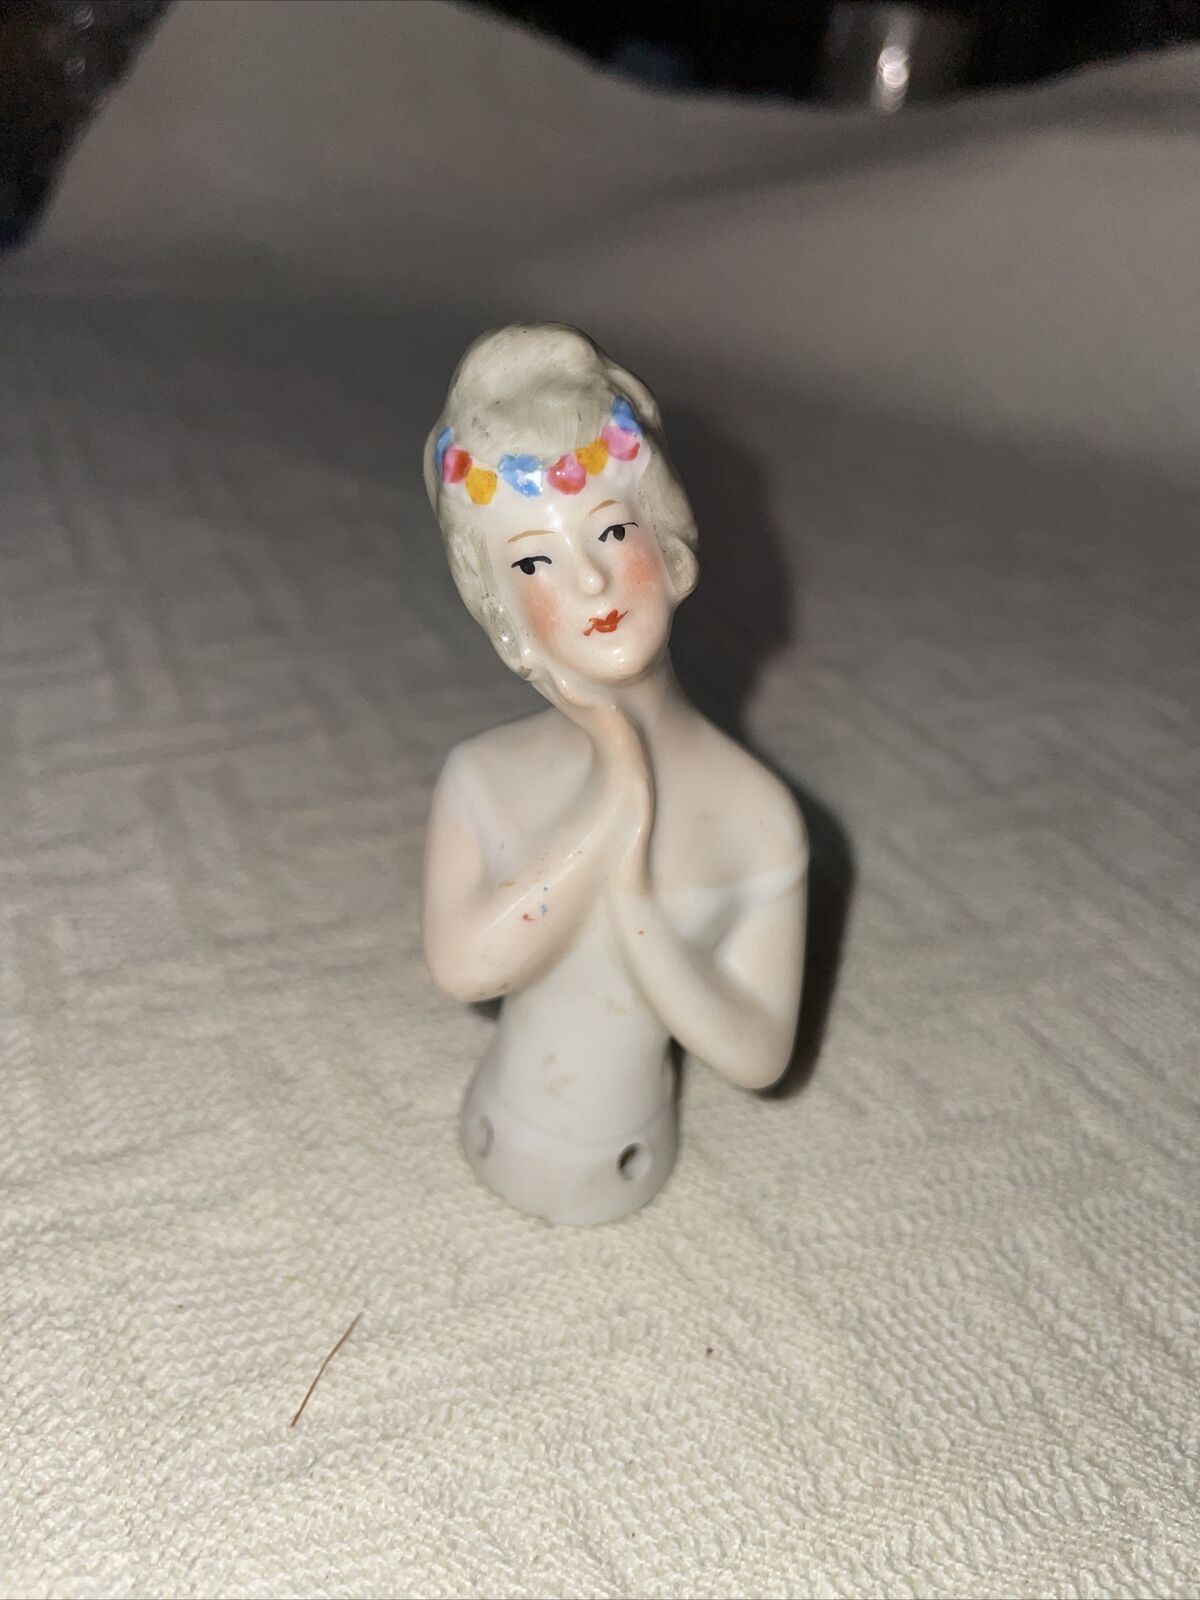 Antique Vintage Porcelain Half Doll w/Flowers - 3” High - Marked Germany - 6087